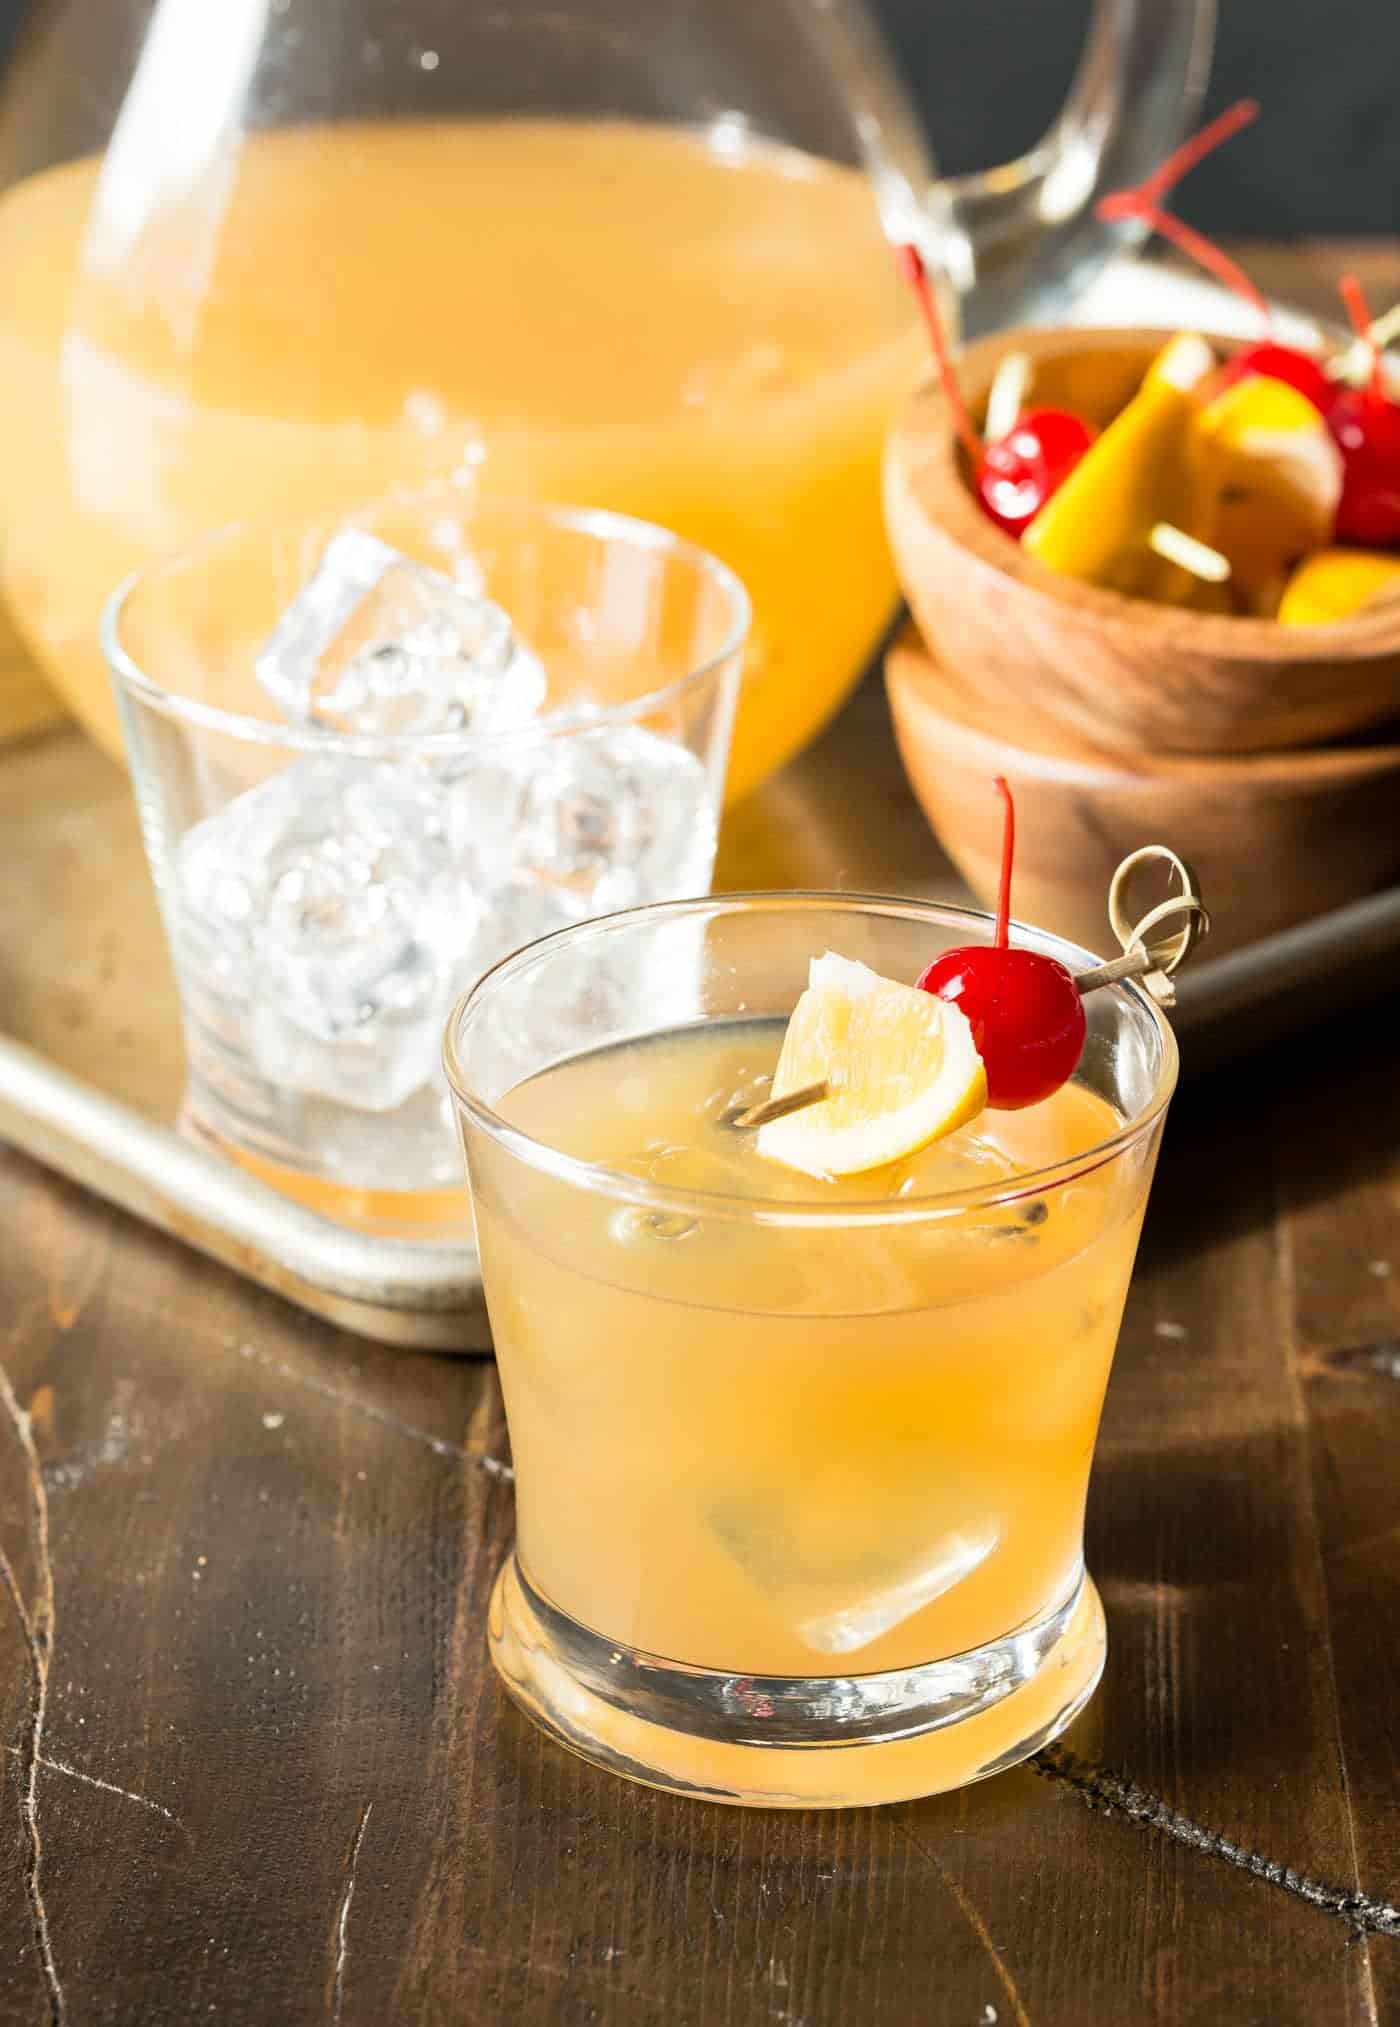 Meyer Lemon Whiskey Sours - Garnish with Lemon